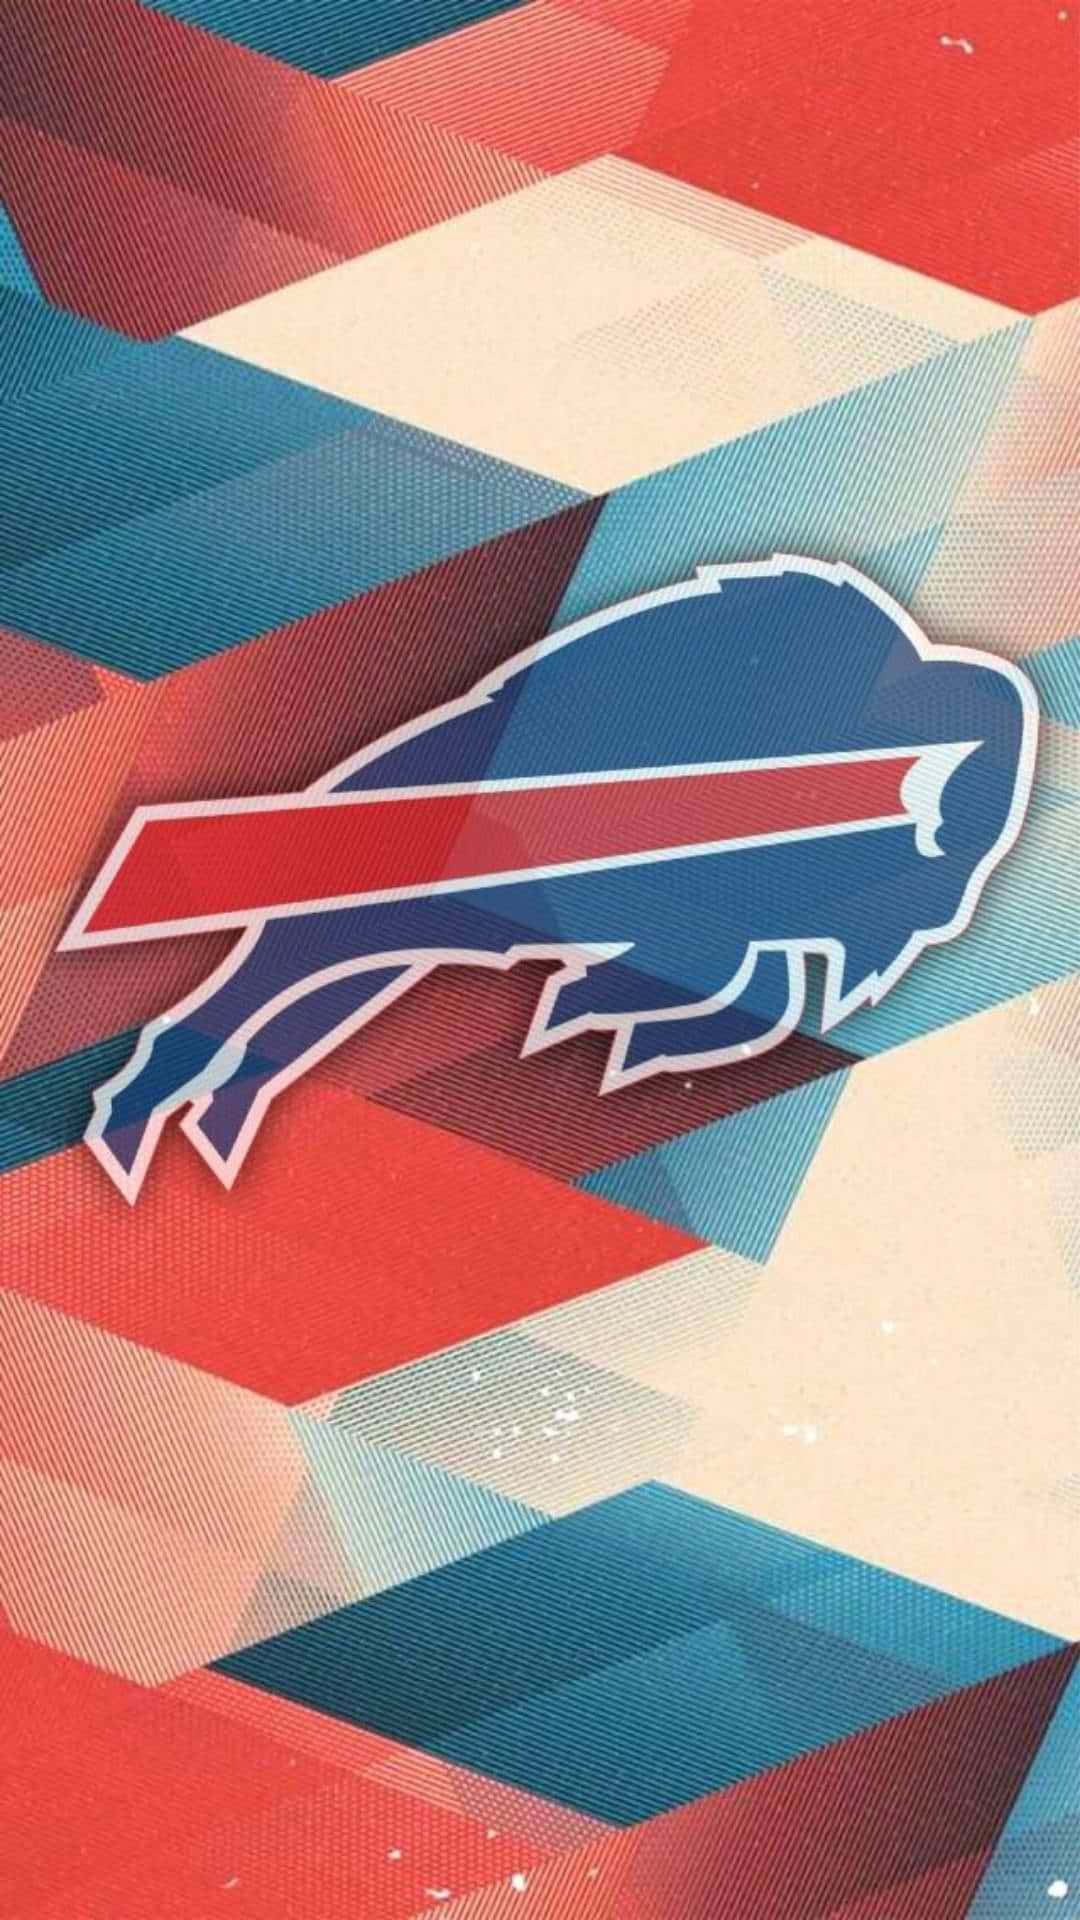 The historic Buffalo Bills logo and colors.